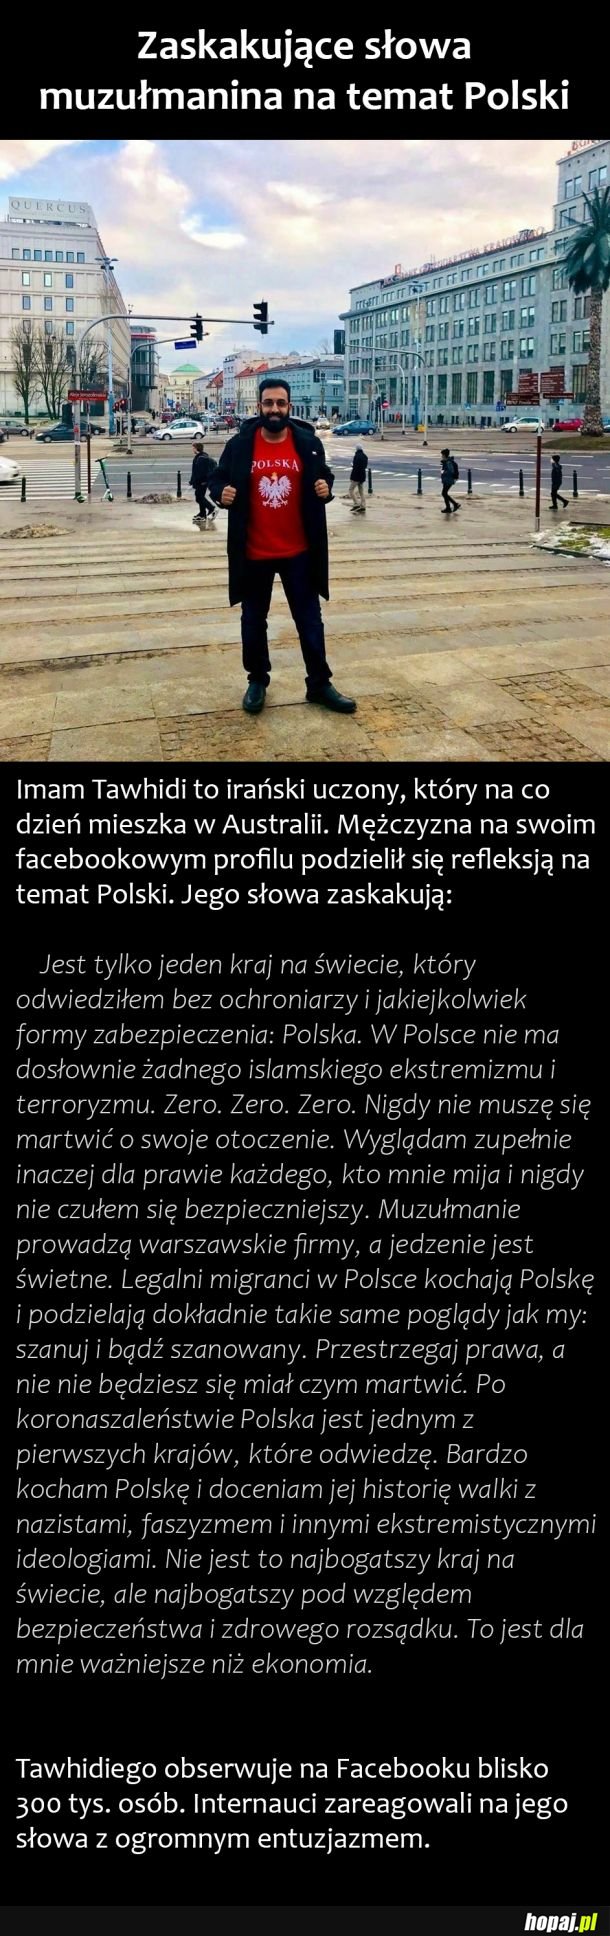 Tolerancja w Polsce